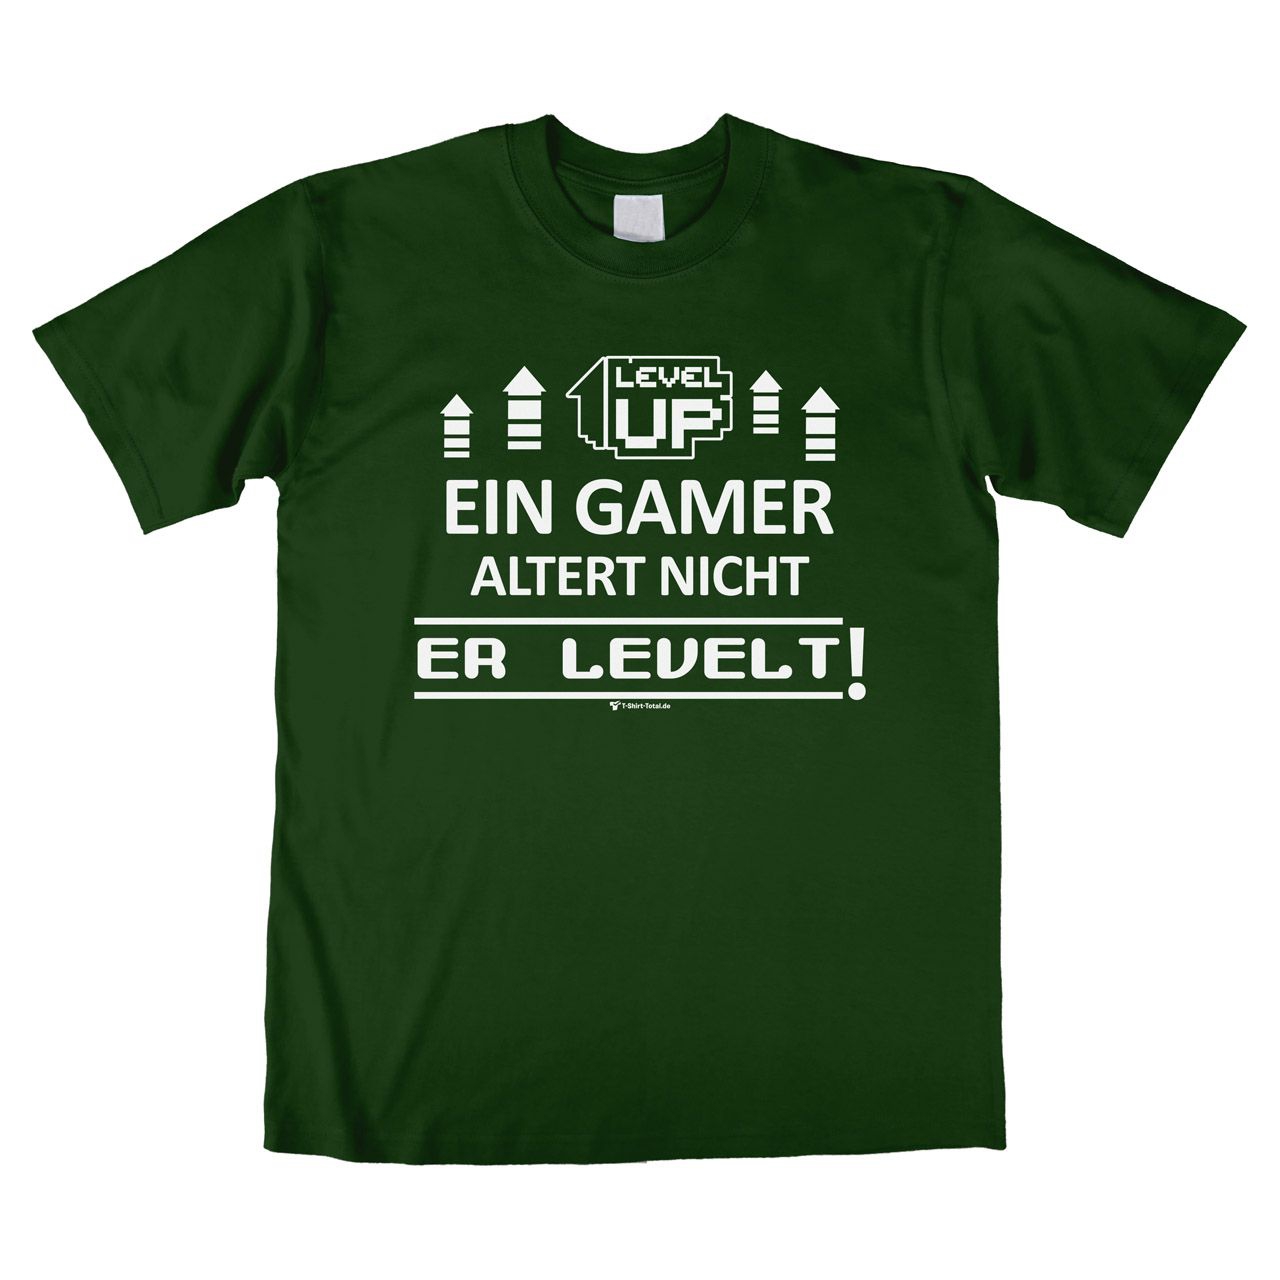 Ein Gamer levelt Unisex T-Shirt dunkelgrün Medium